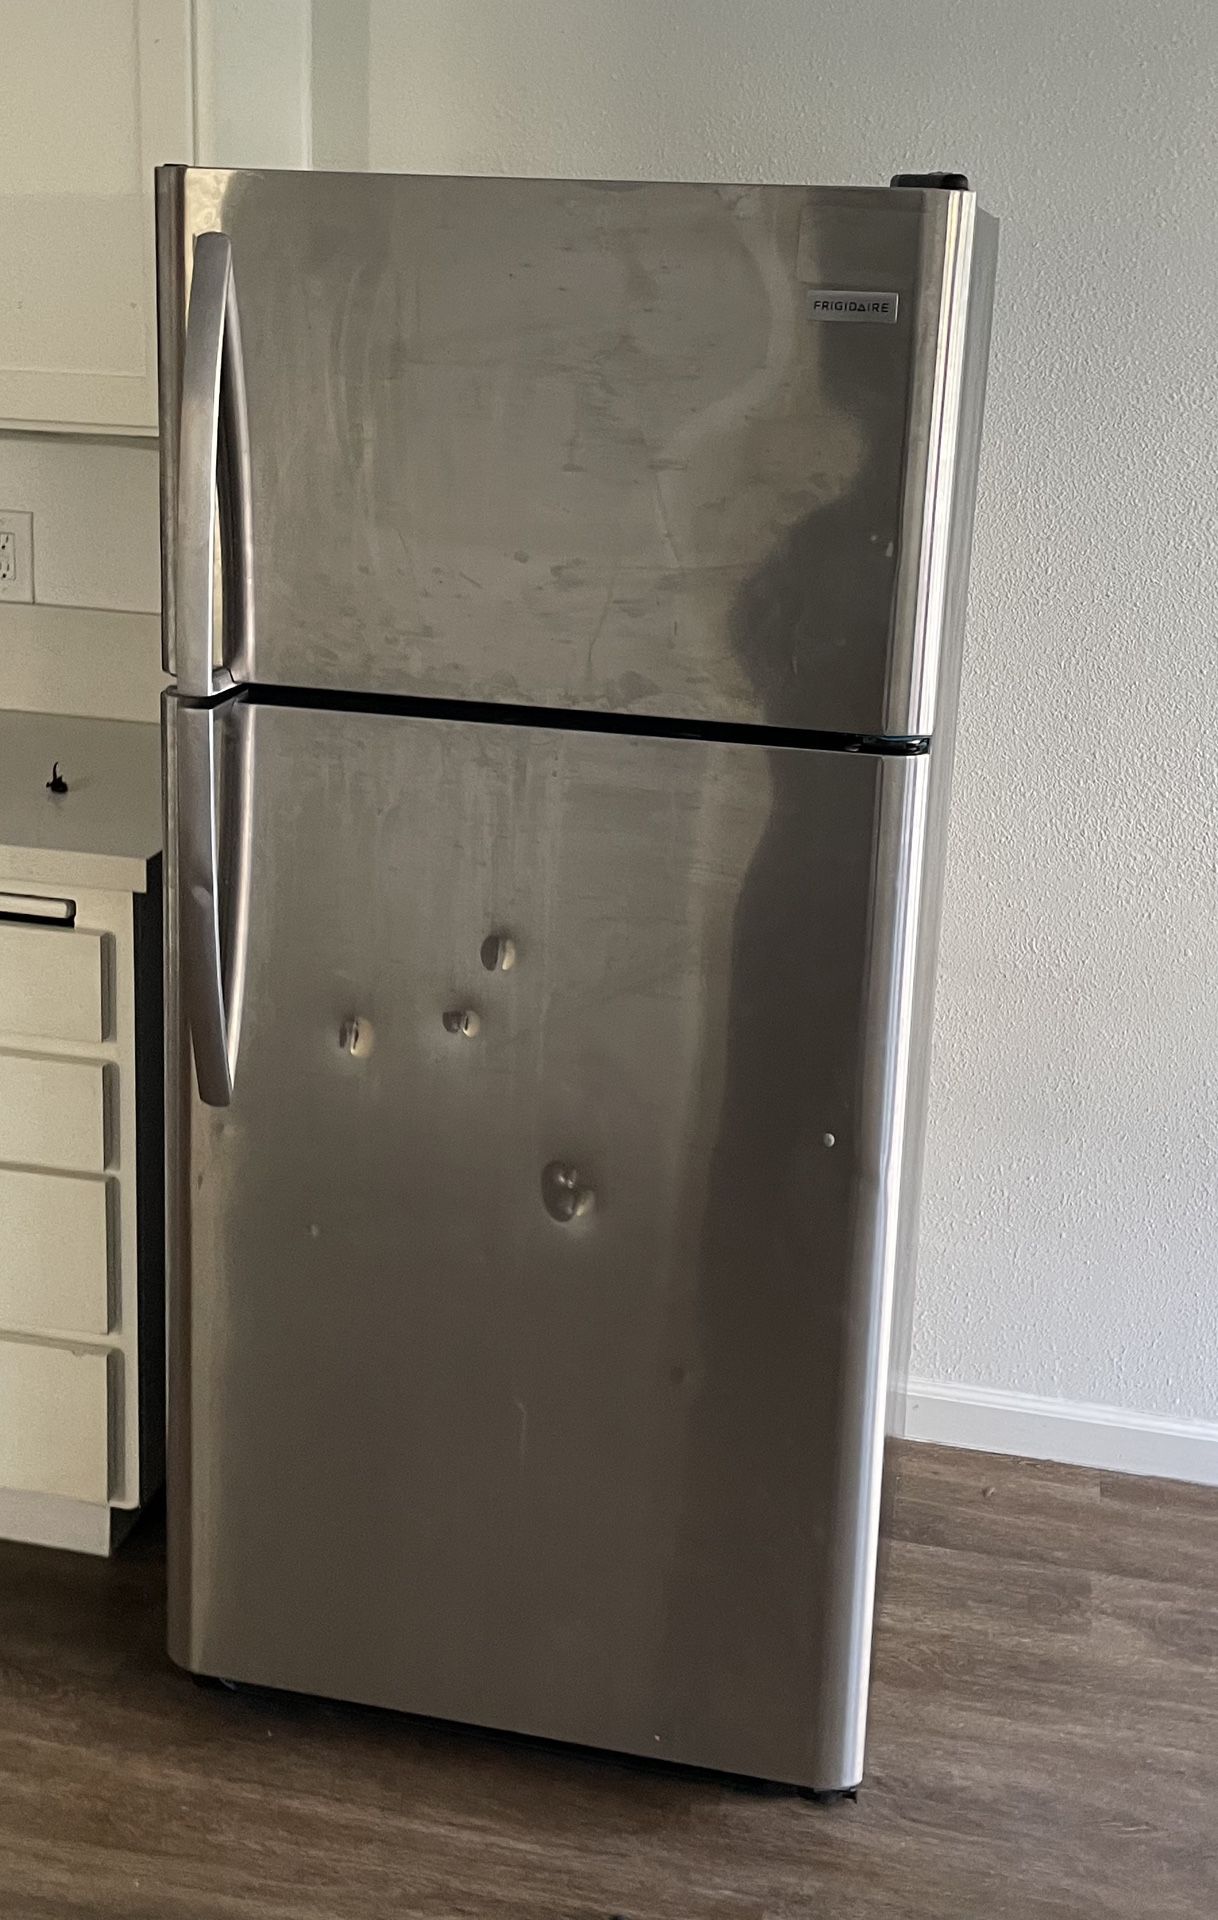 FREE Frigidaire Refrigerator Freezer Combo